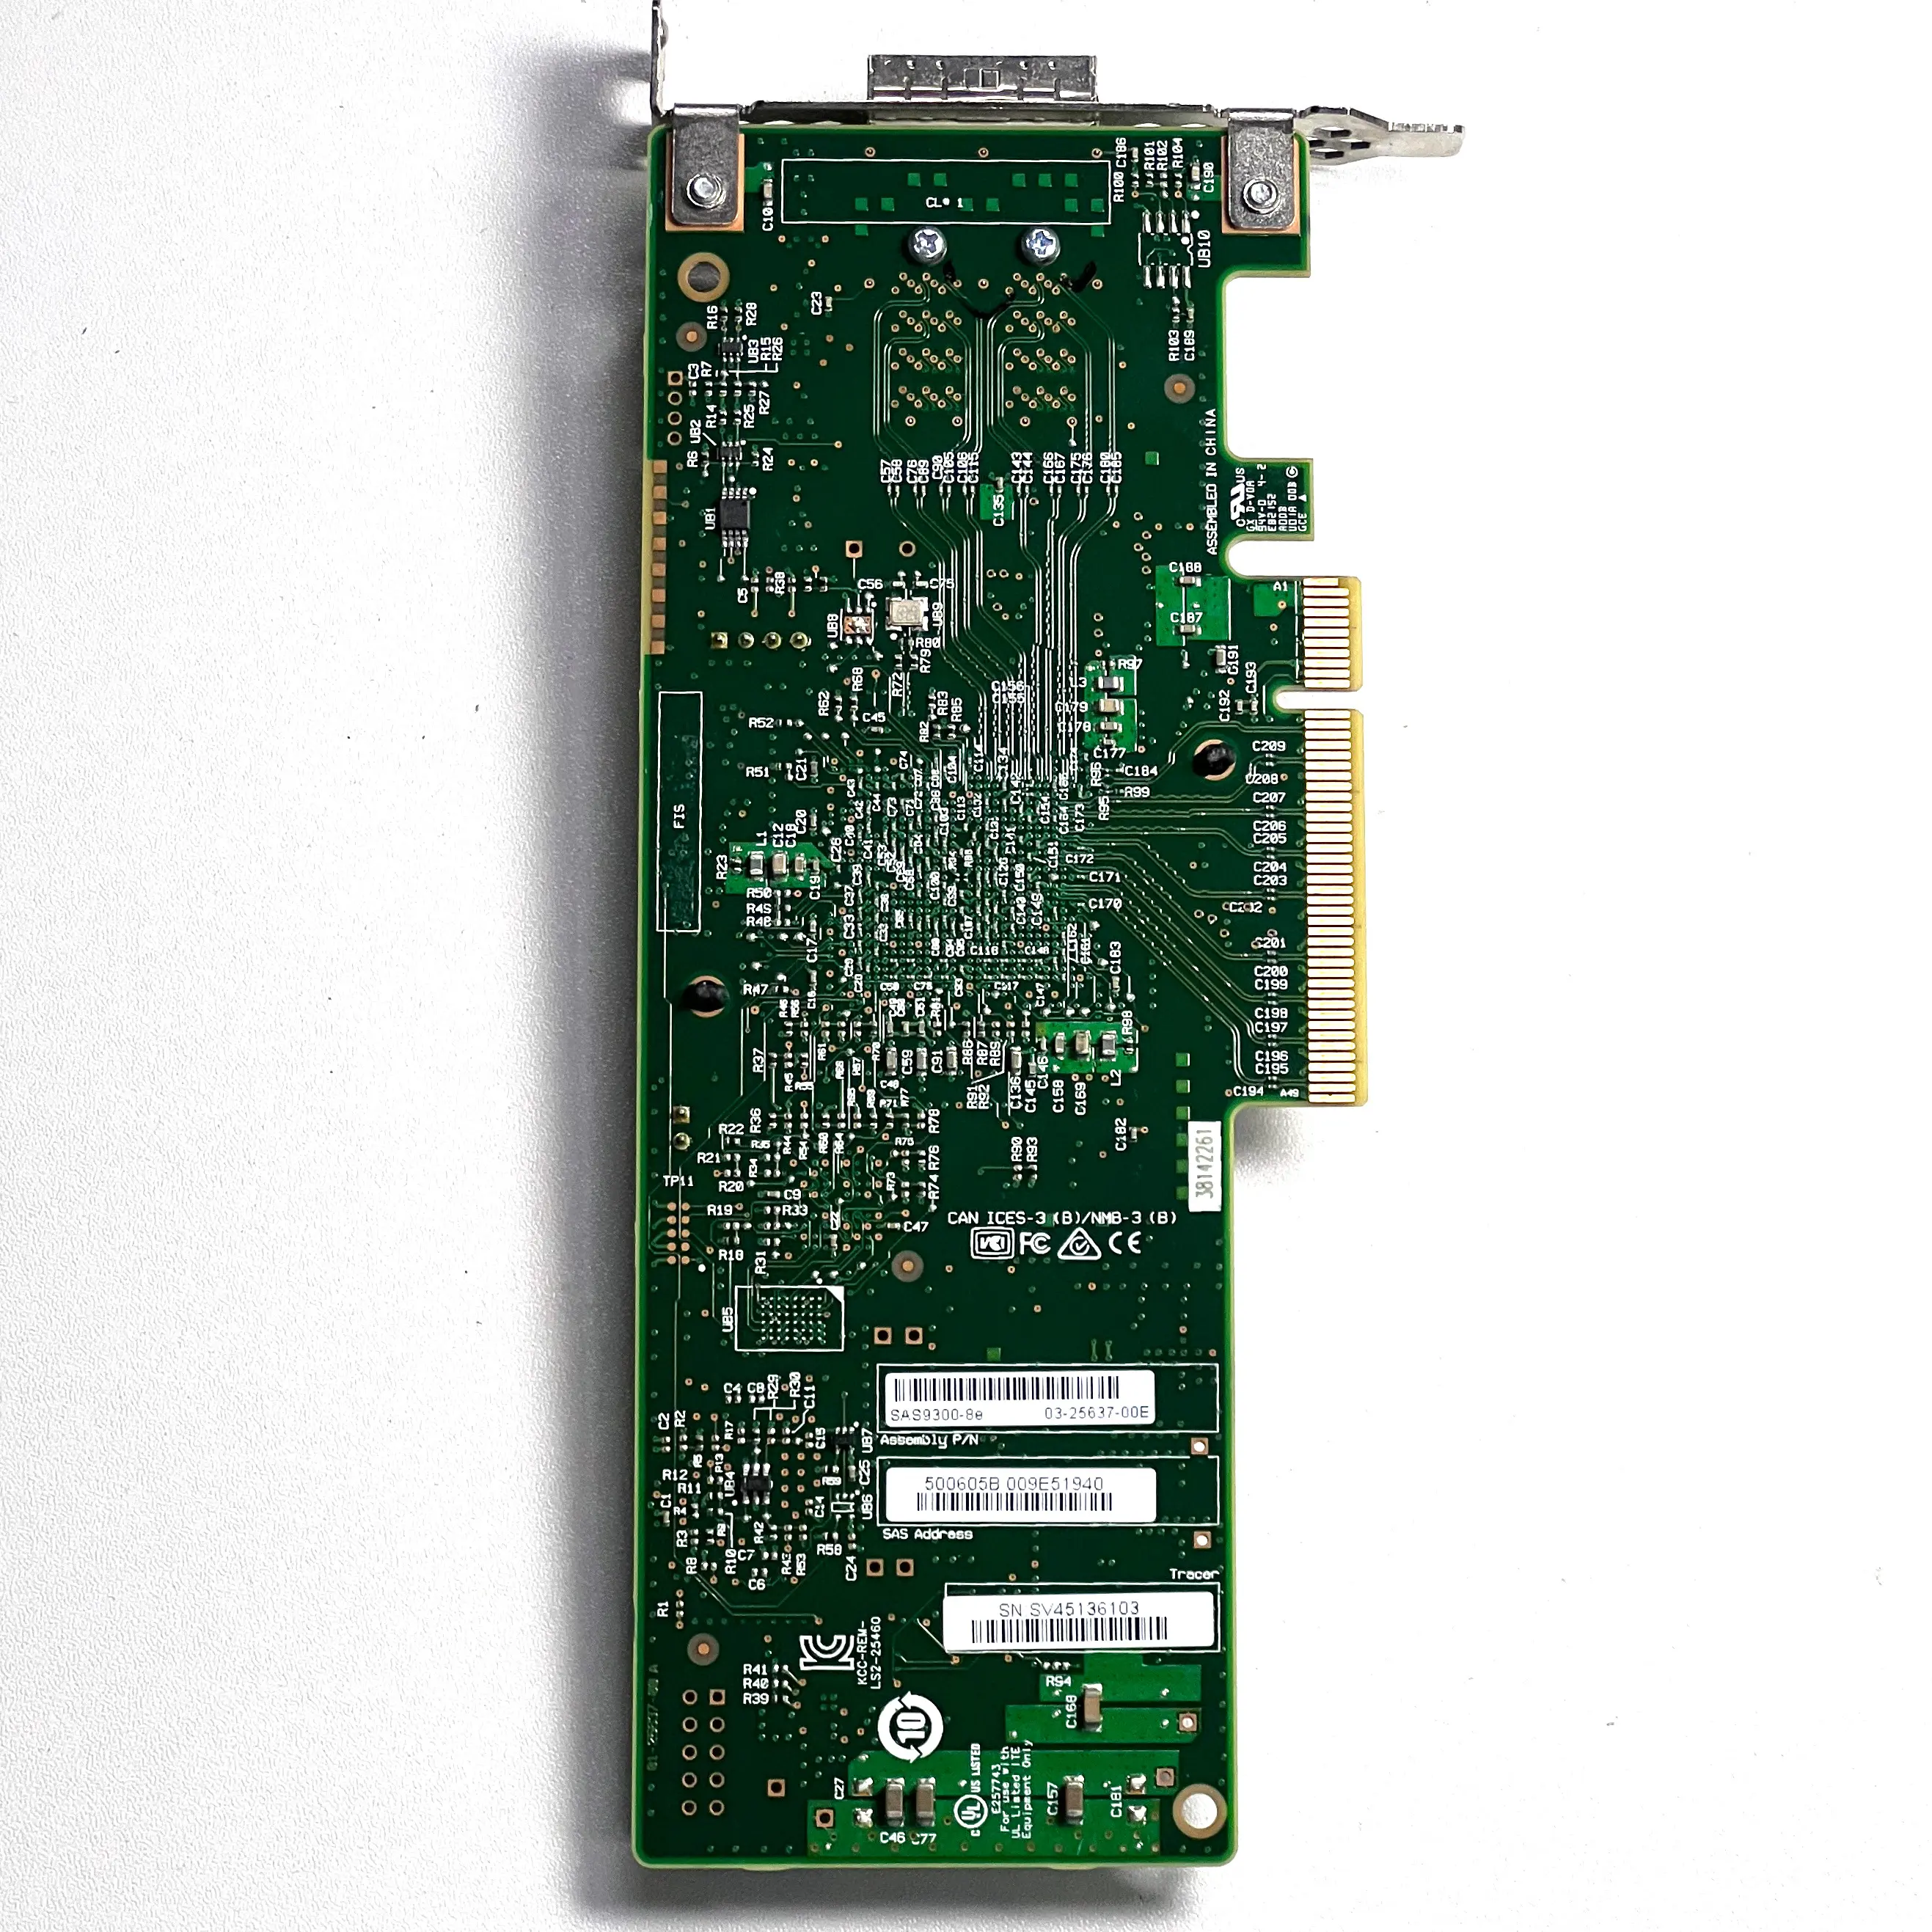 Original hba card broadcom 9300-8e LSI00343 Internal Network Adapter RAID Controller Card